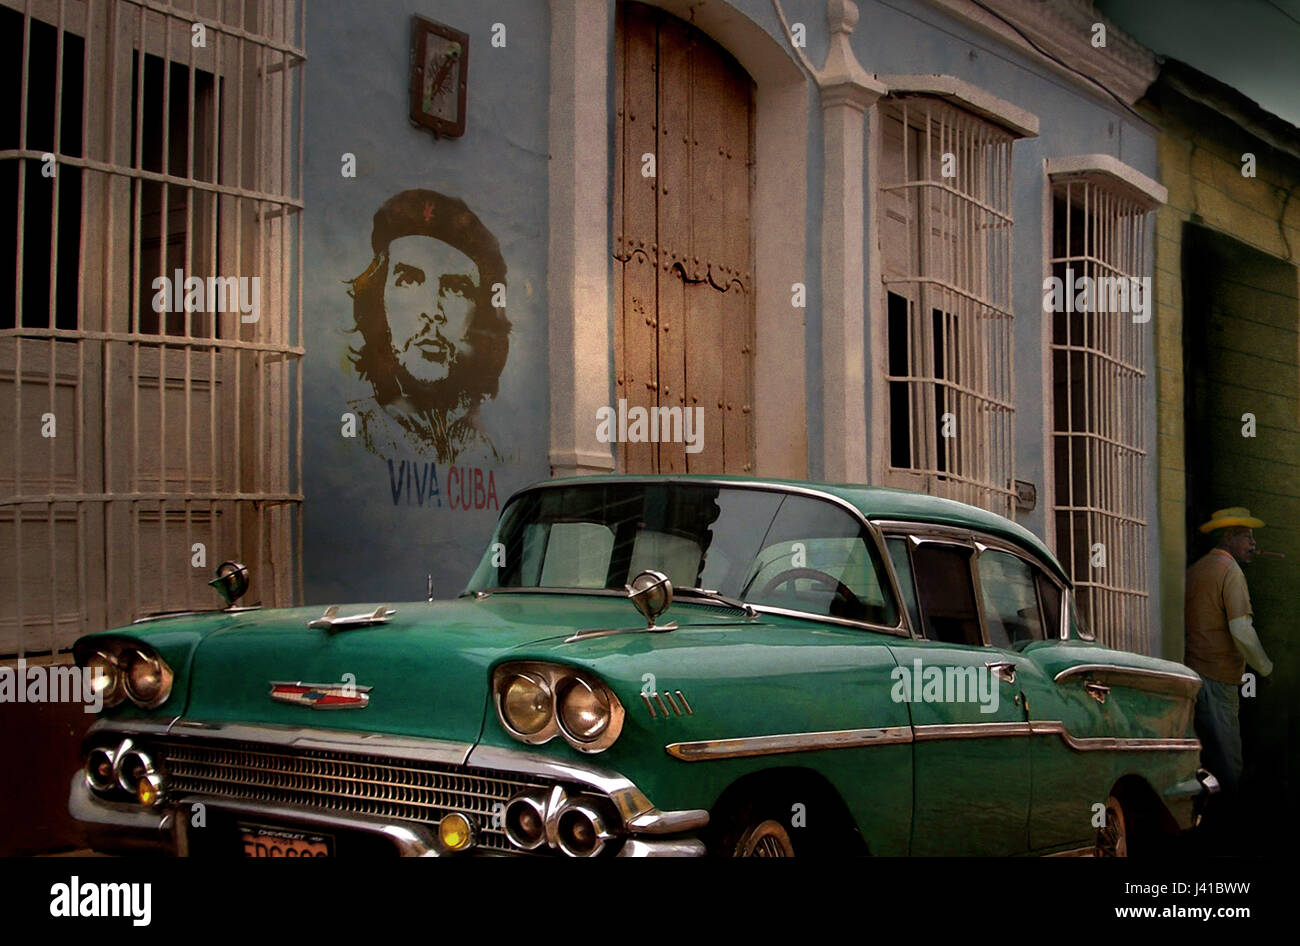 Street scene with oldtimer and Che Guevara wall painting, Trinidad, Sancti Spiritus, Cuba, Carribean, North America, America Stock Photo